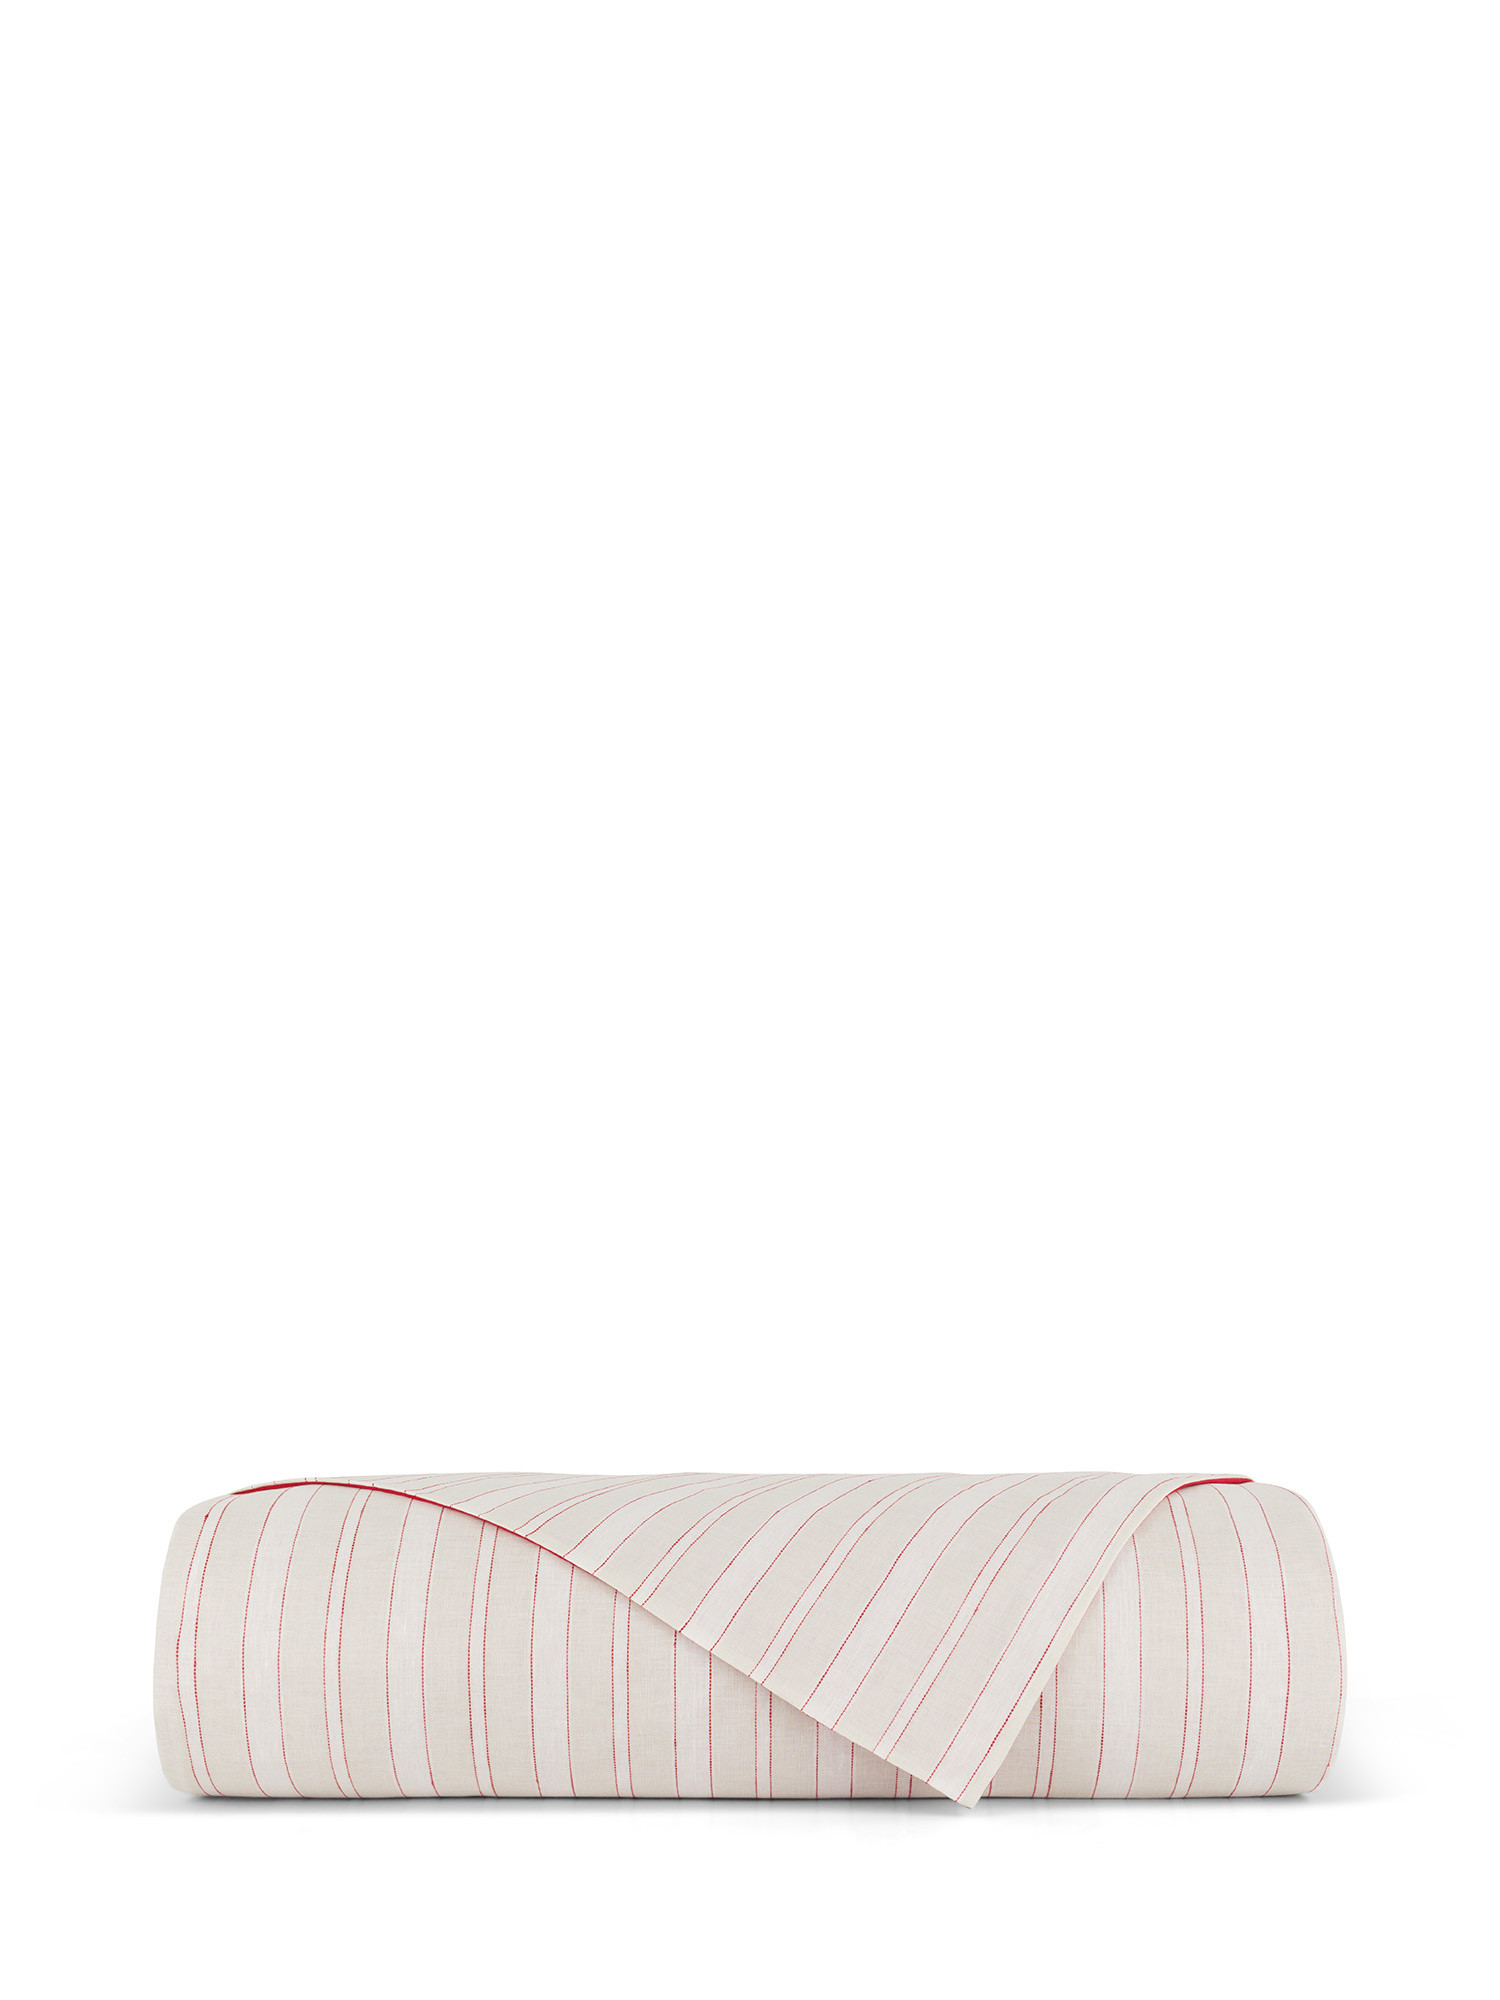 Striped cotton blend duvet cover, Red, large image number 1